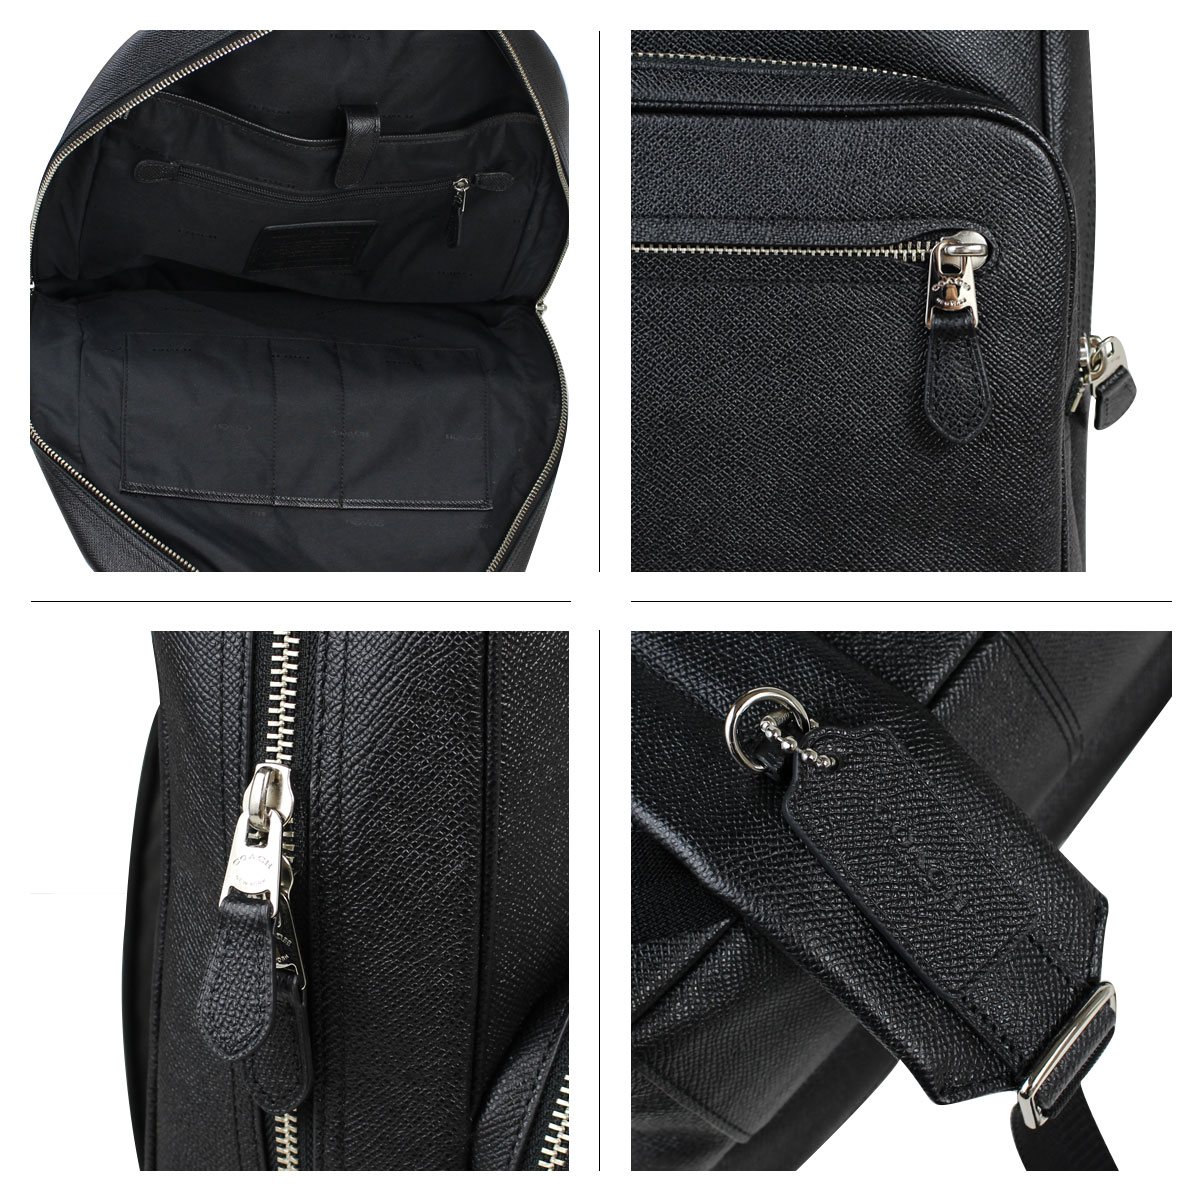 Sugar Online Shop: [SOLD OUT] COACH coach mens bag rucksack backpack products 71983 black ...